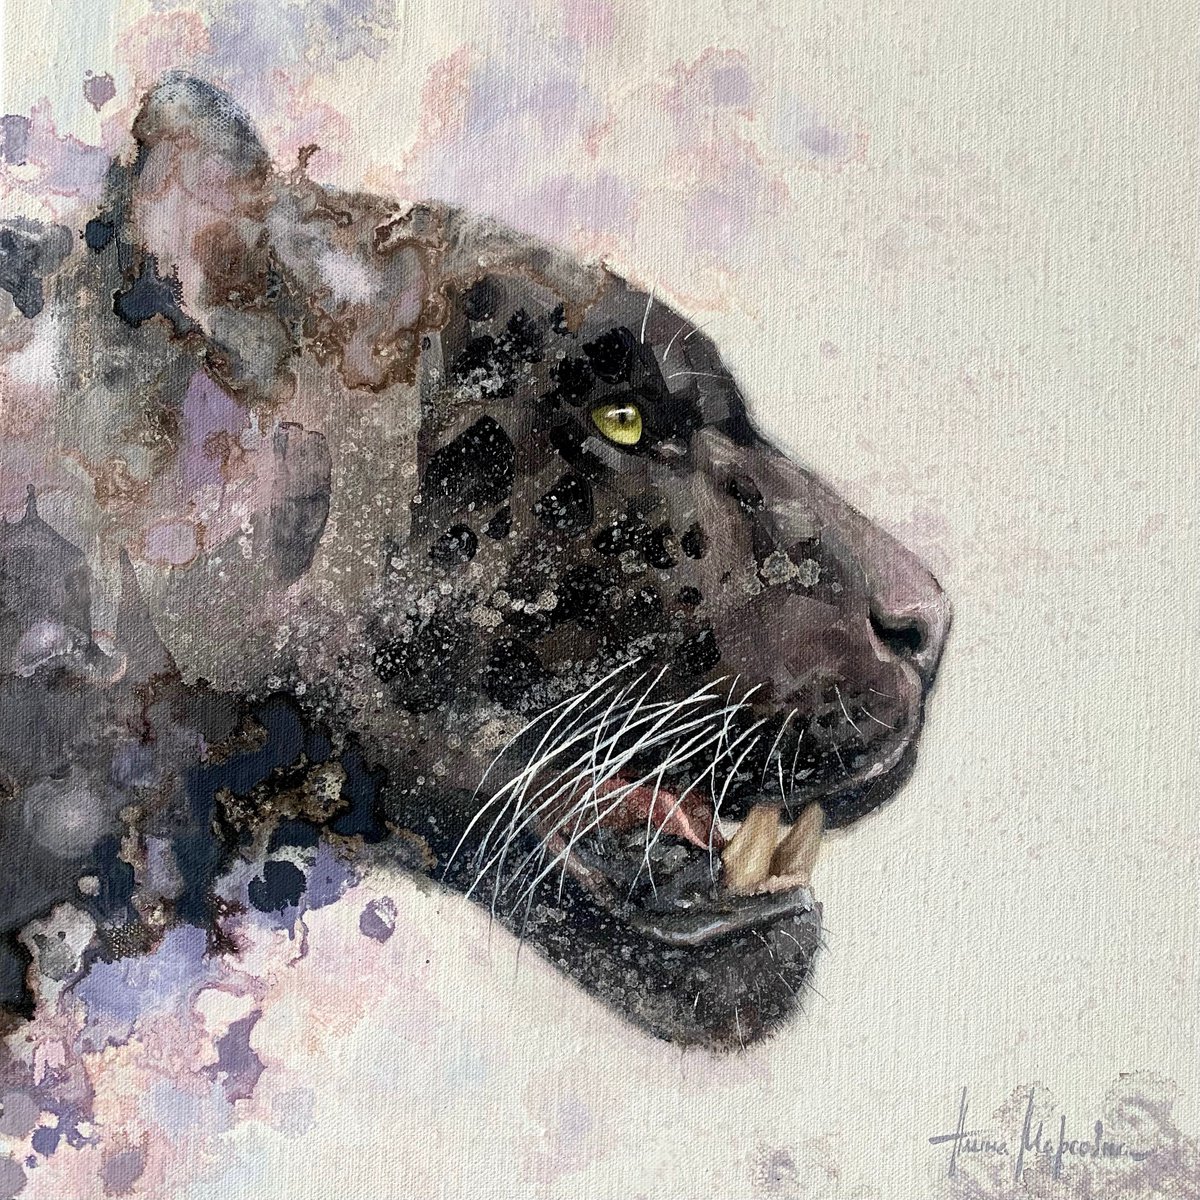 Black panther by Alina Marsovna